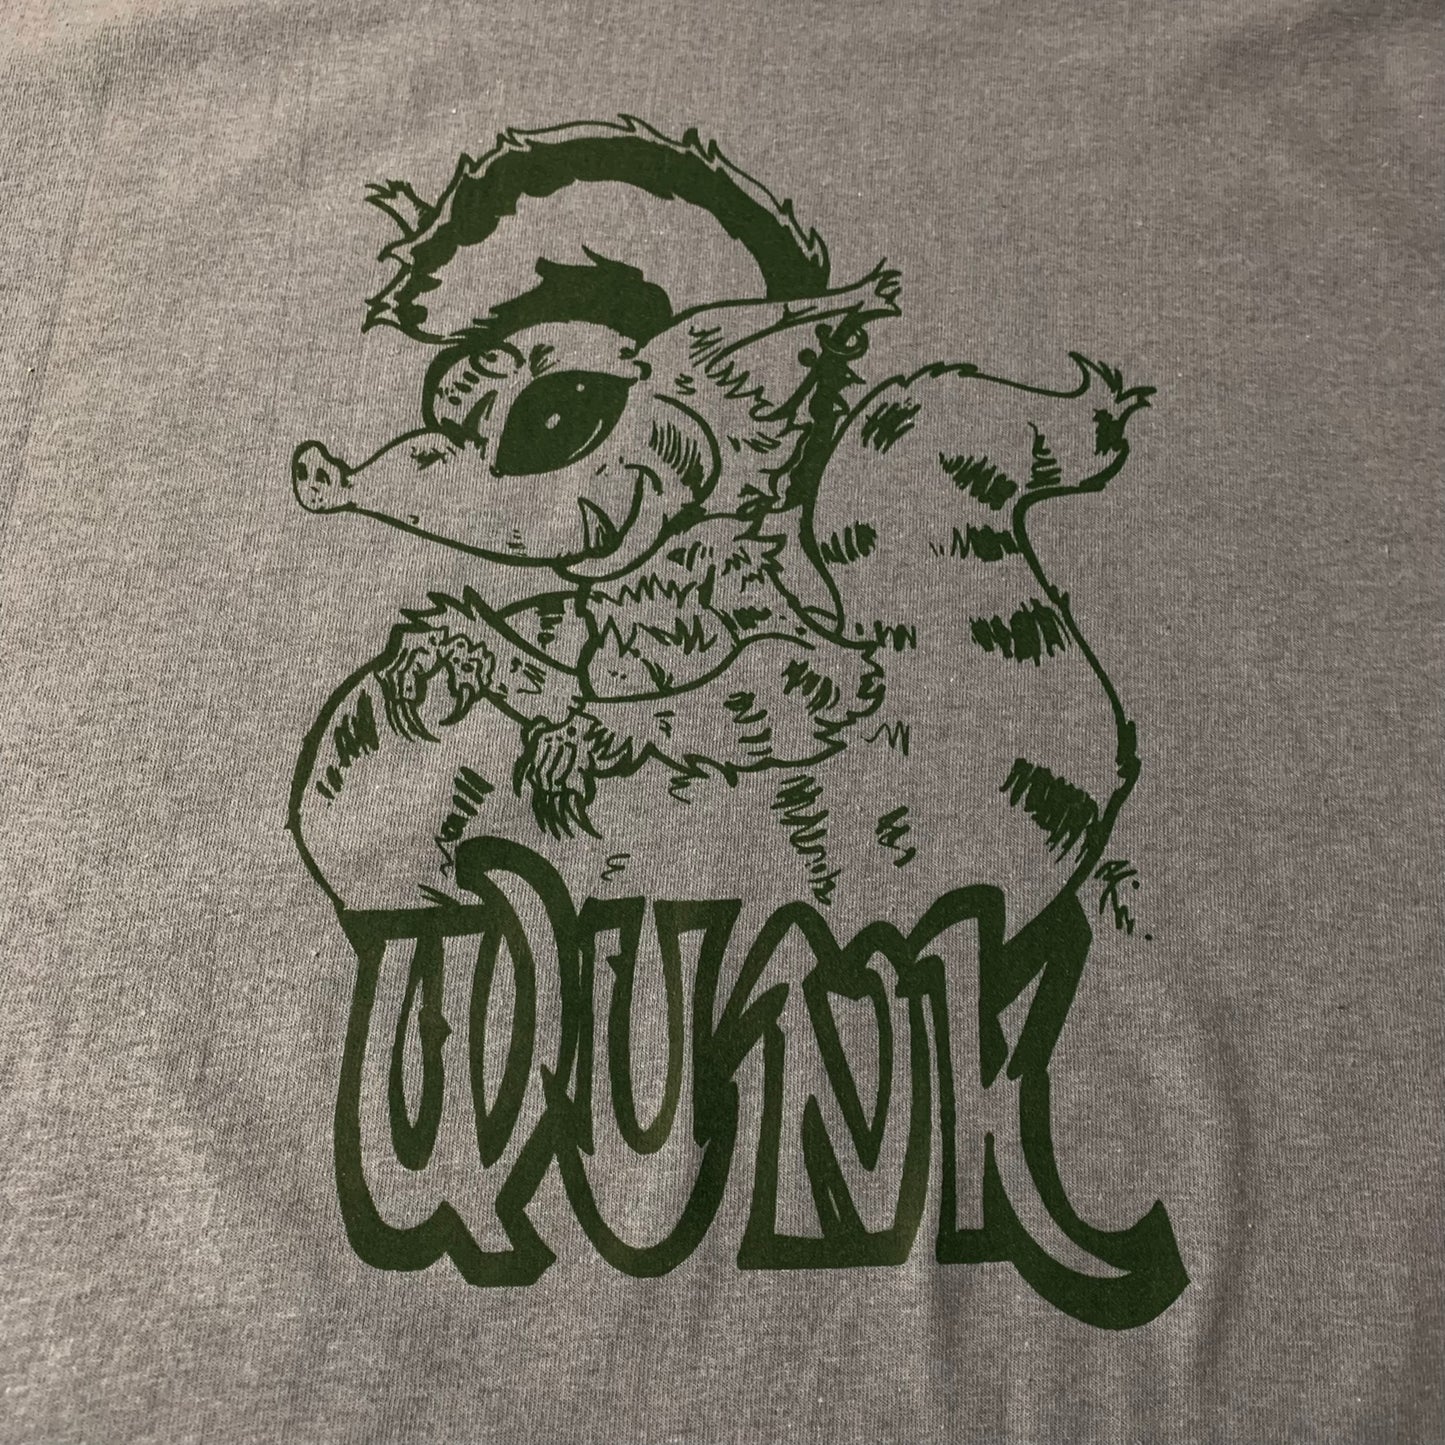 The Wunk T-shirt